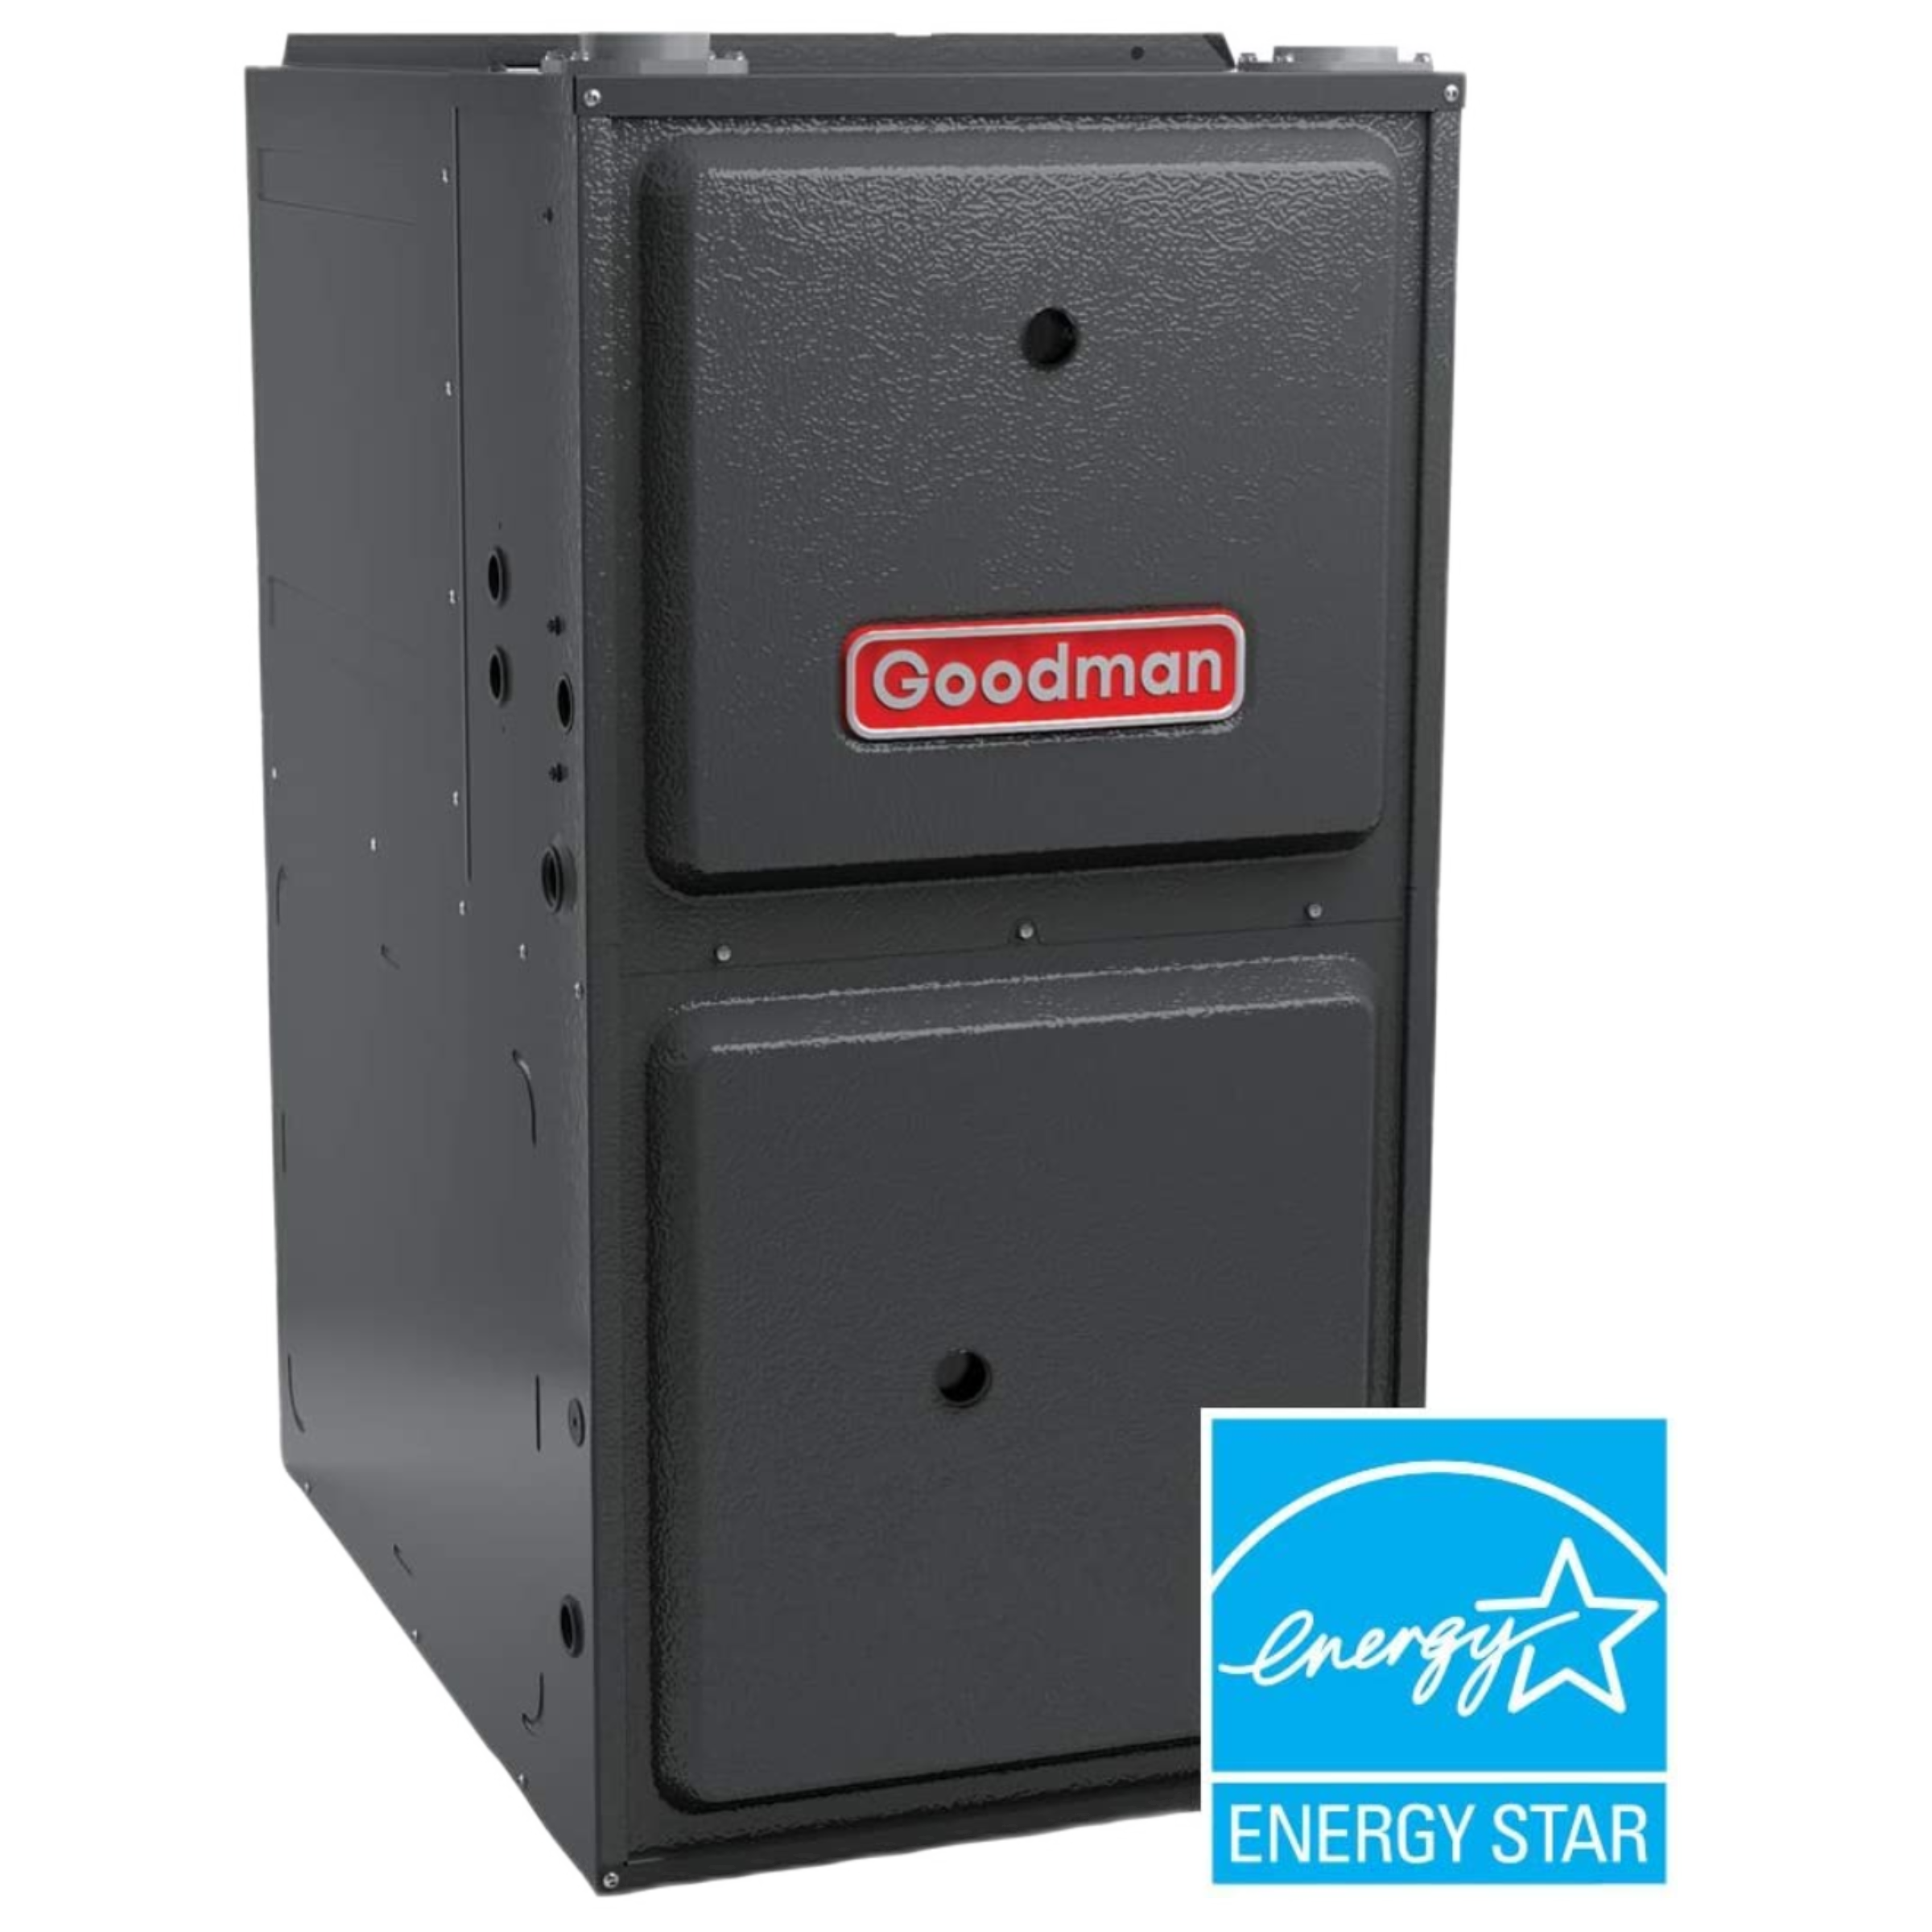 GCVM97 Goodman Gas Furnace Series Downflow/Horizontal, 97% AFUE, Variable-Speed ECM/ComfortBridge, Modulating Gas Valve